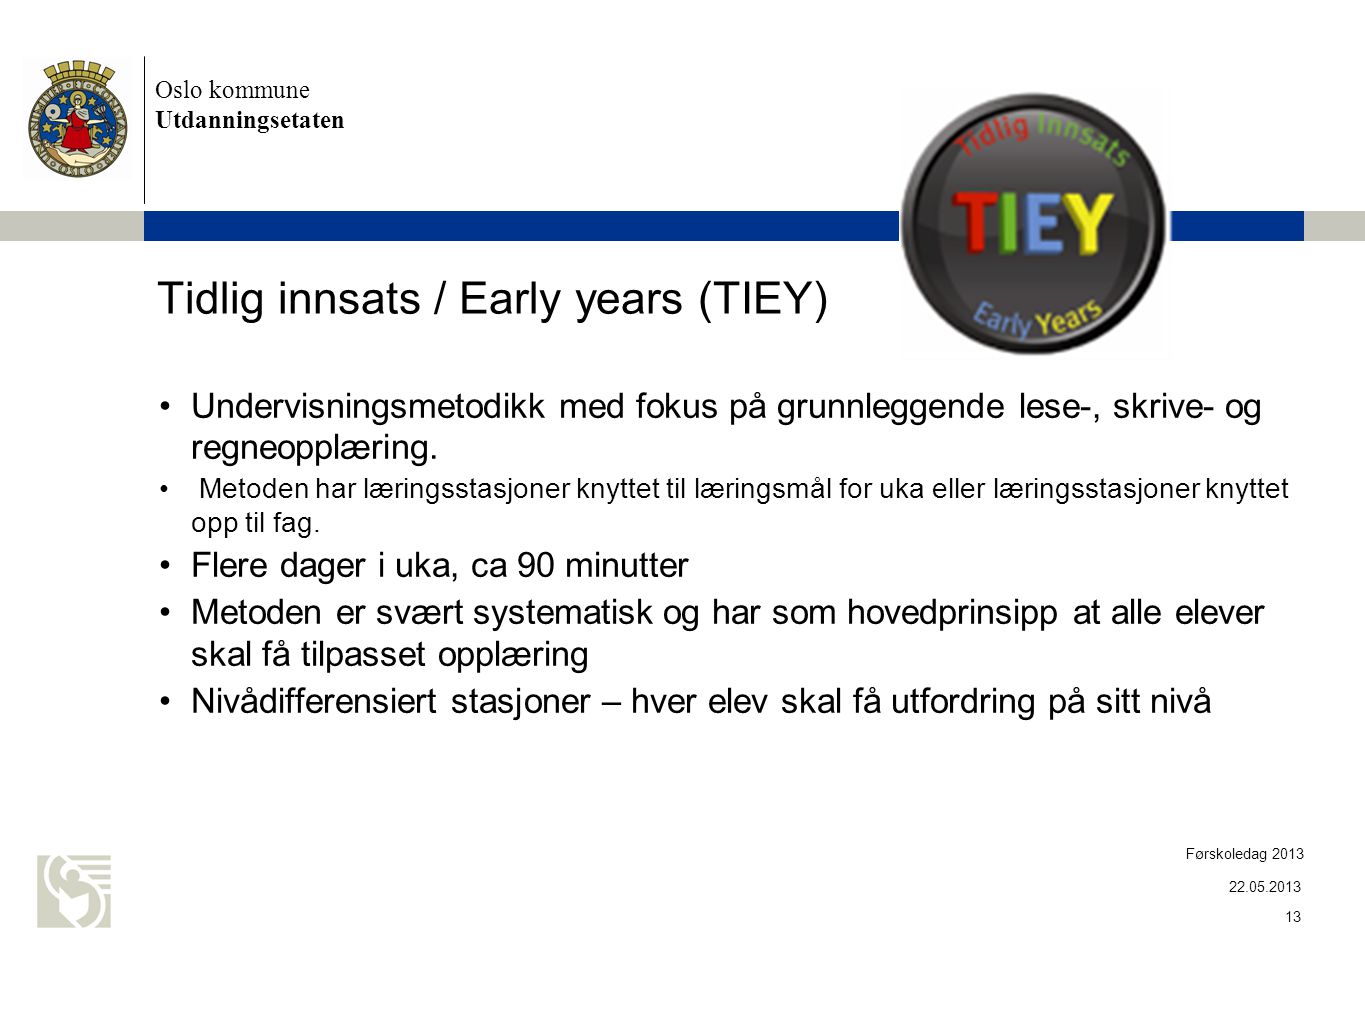 Tidlig innsats / Early years (TIEY)